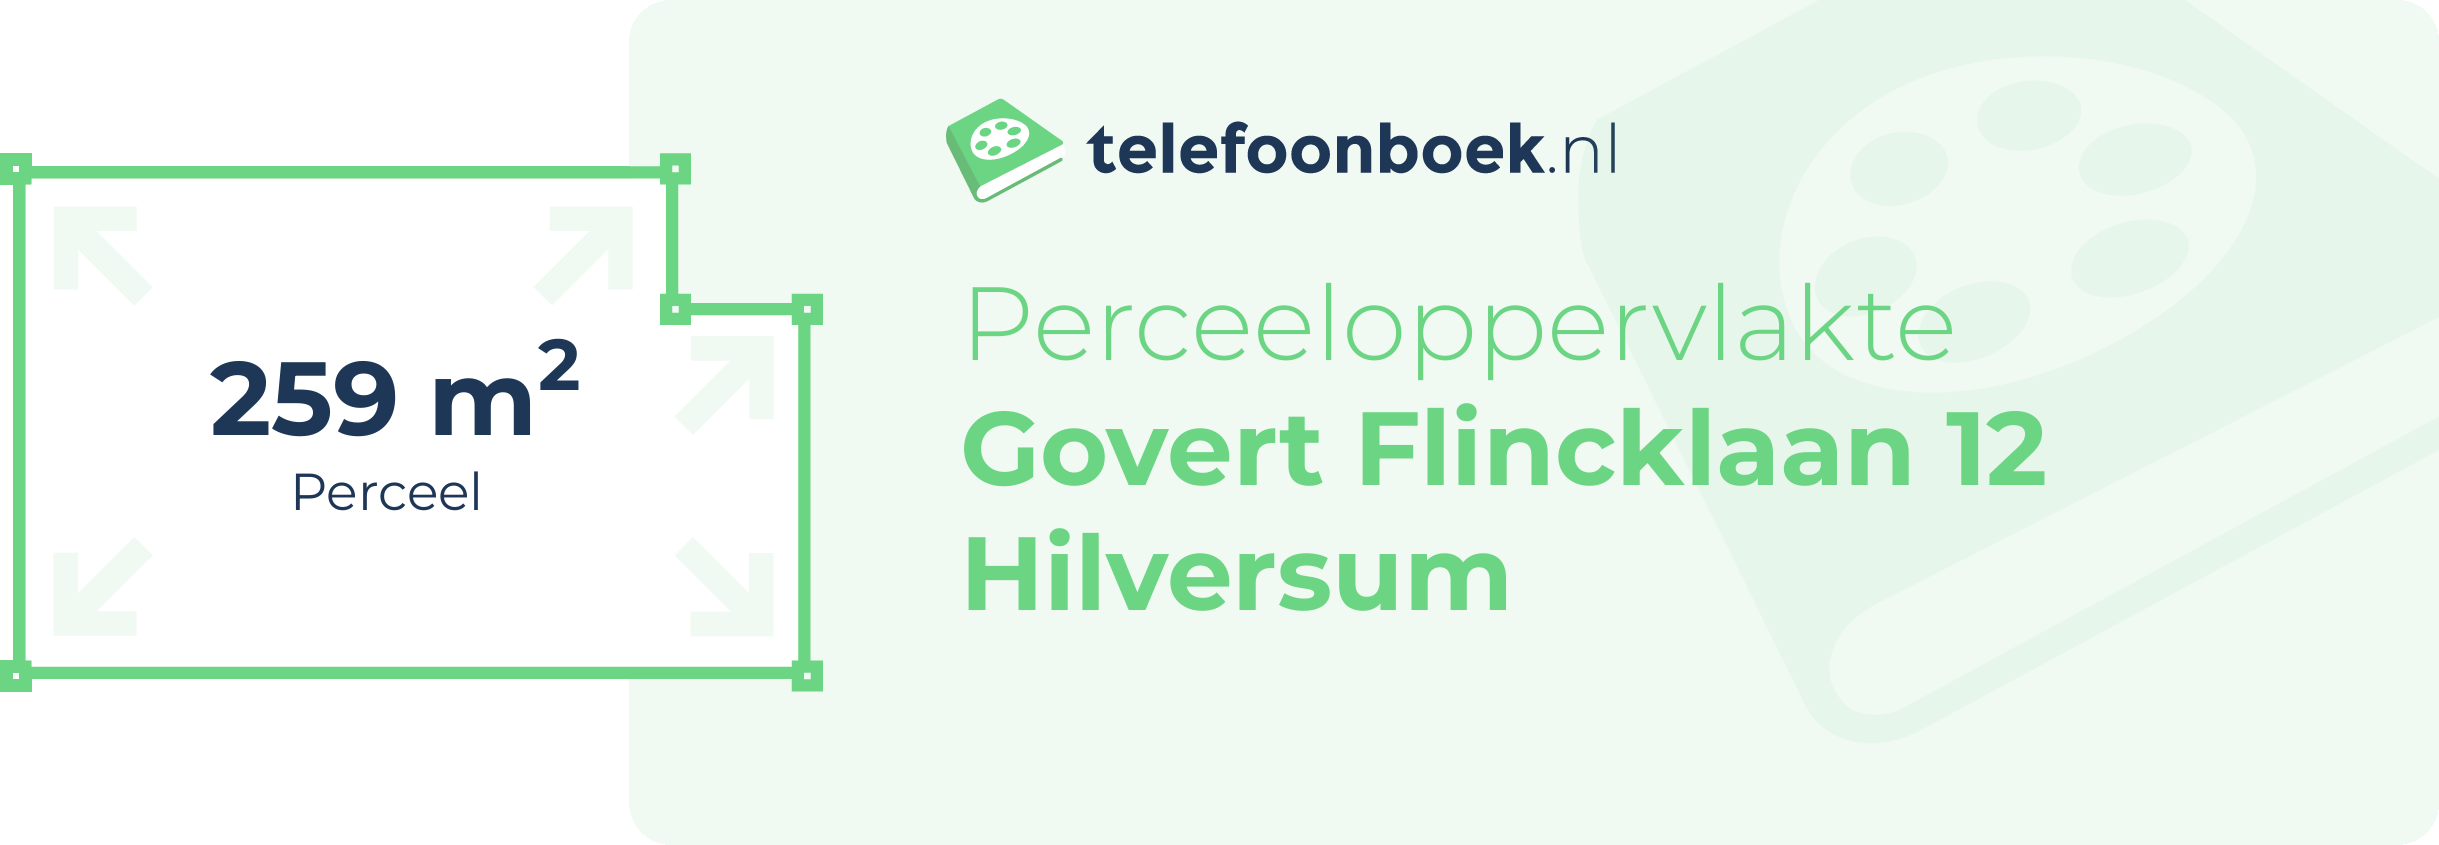 Perceeloppervlakte Govert Flincklaan 12 Hilversum